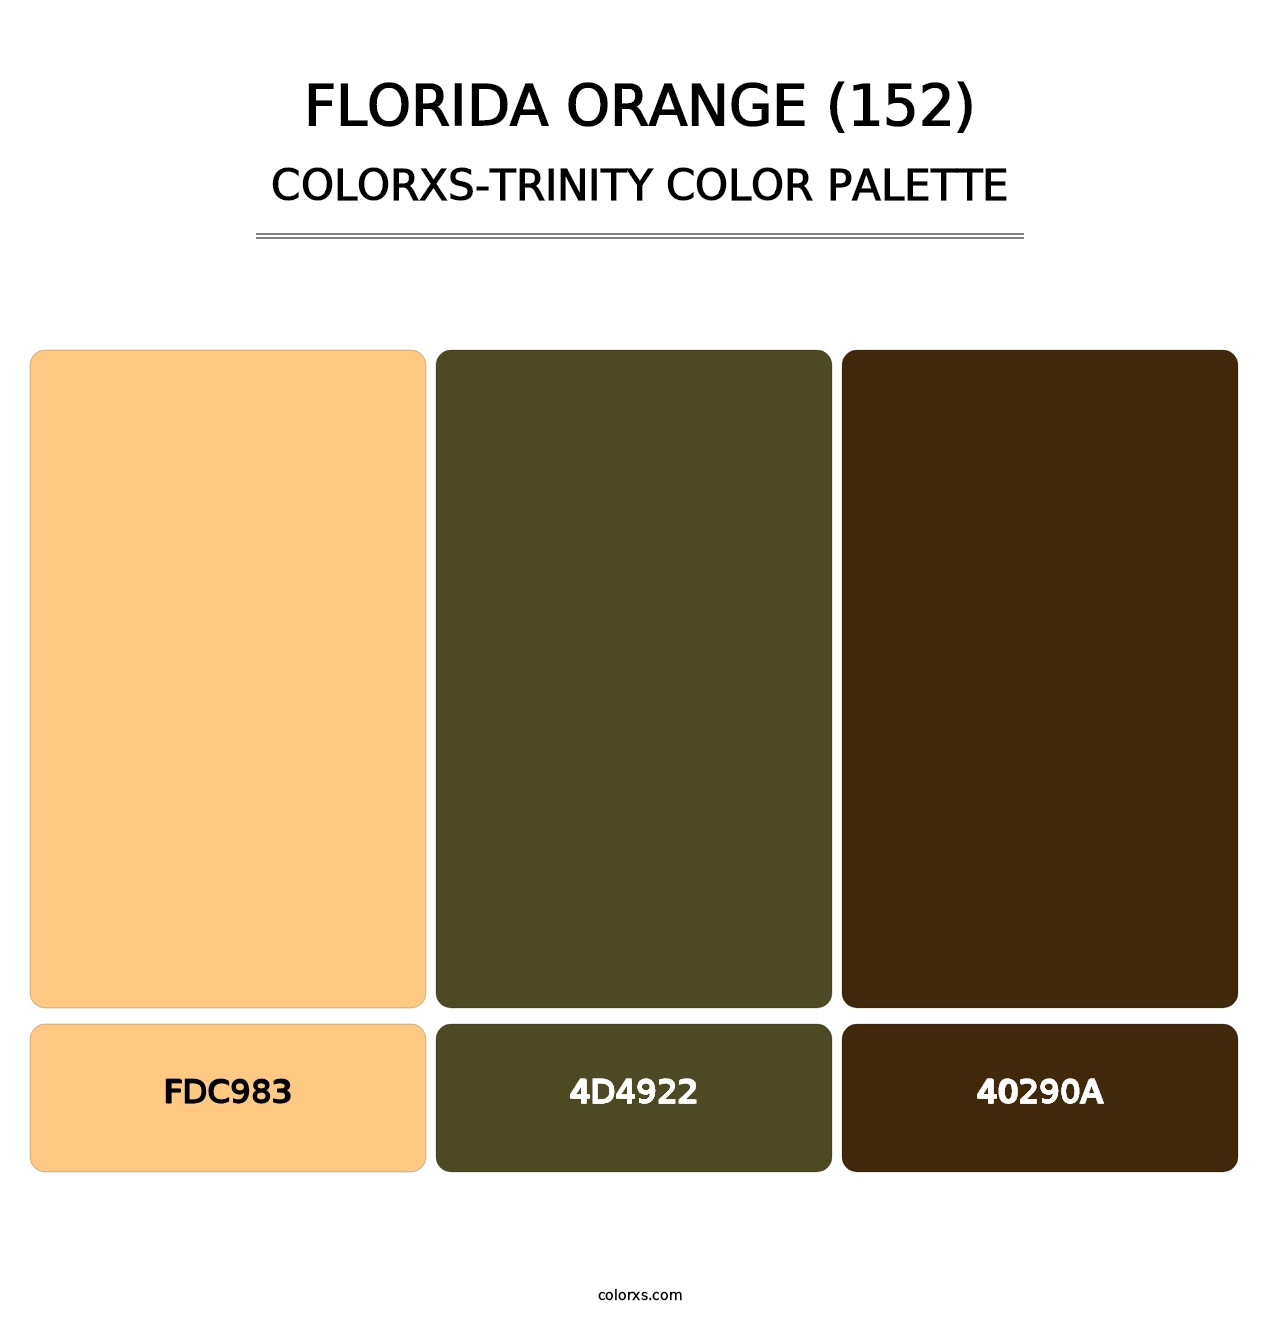 Florida Orange (152) - Colorxs Trinity Palette